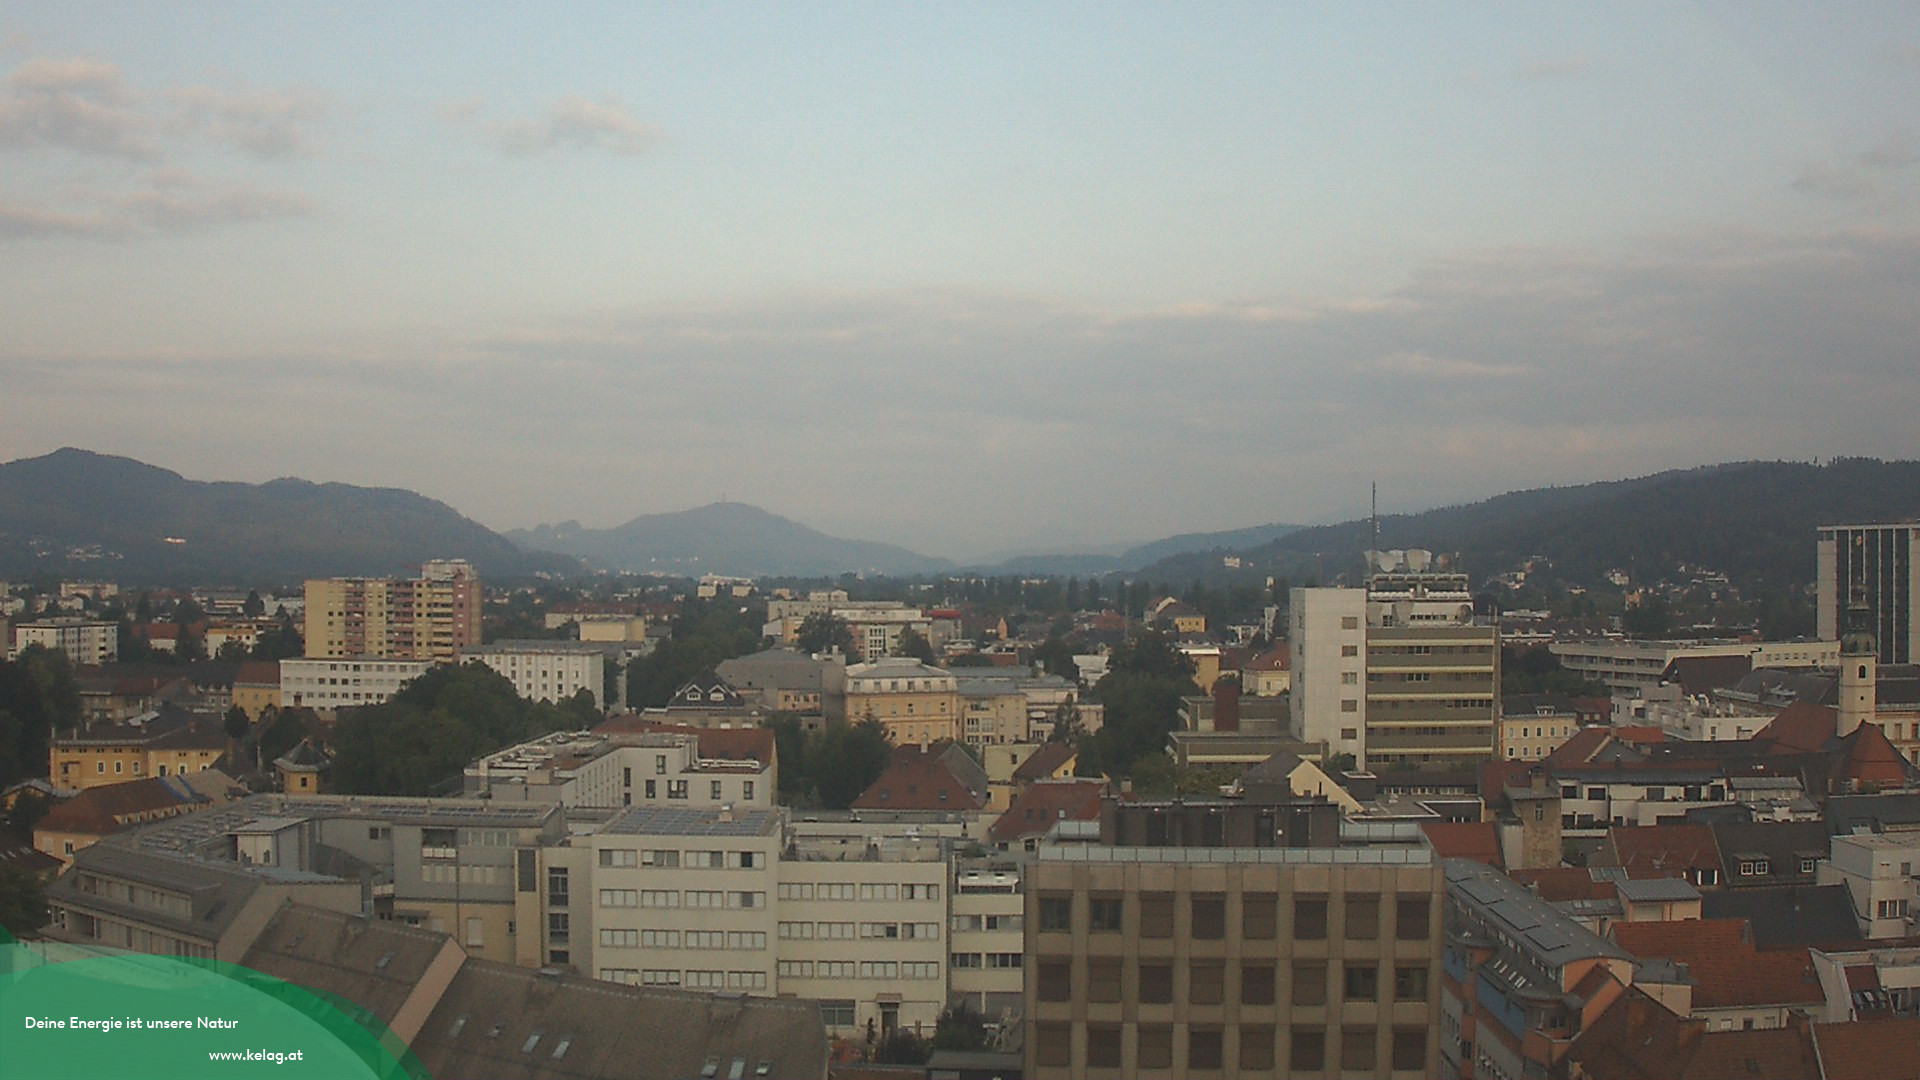 Klagenfurt So. 06:46